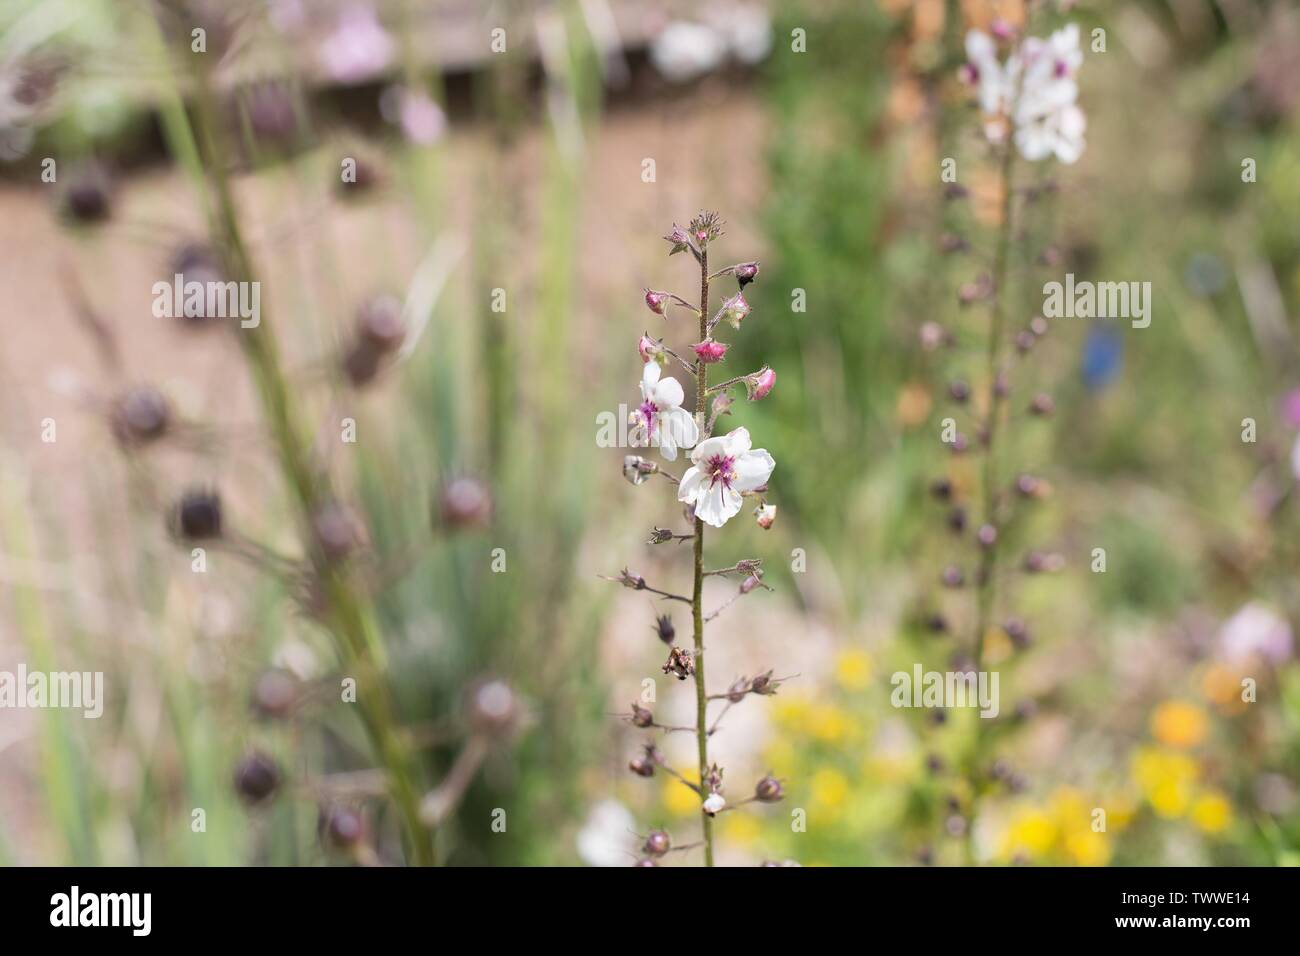 Verbascum Blattaria Also Known As Moth Mullein Flowers Stock Photo Alamy